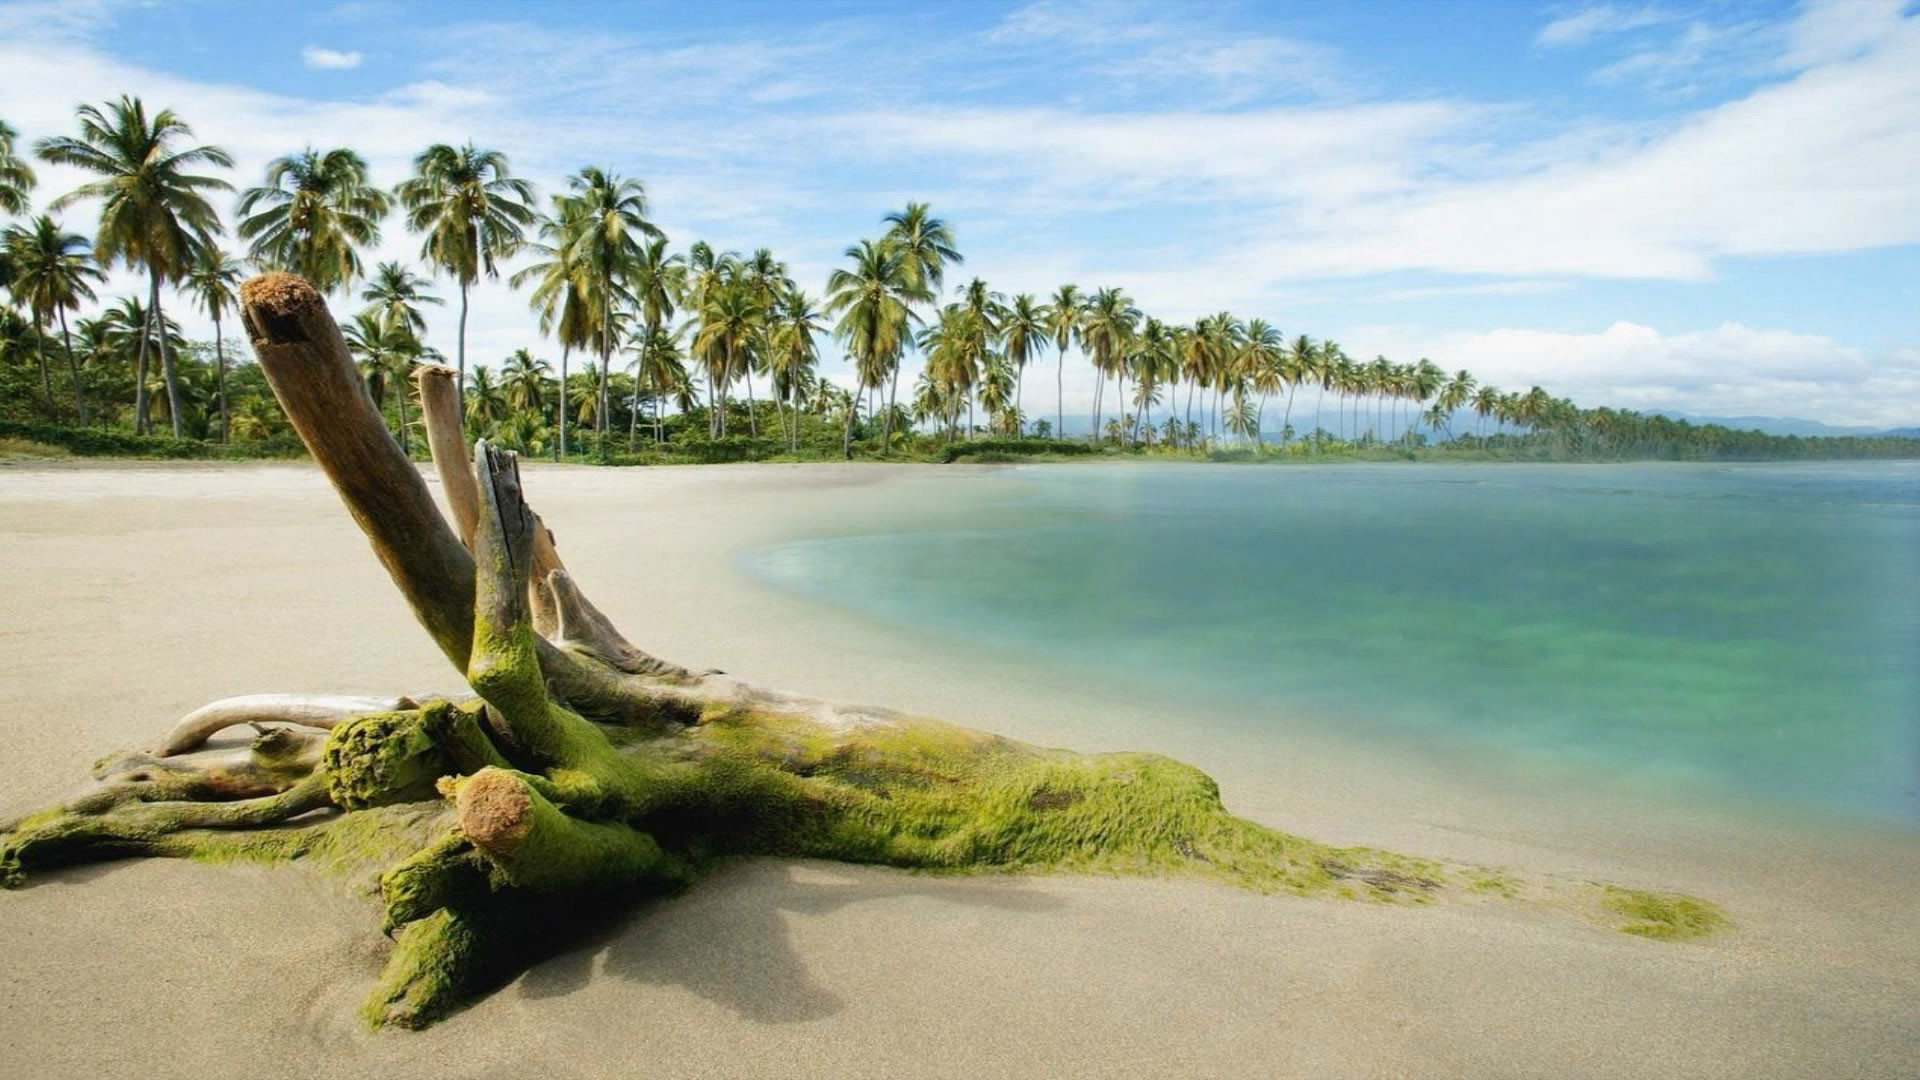 Hd pics photos nature beach coconut sea view desktop background wallpaper